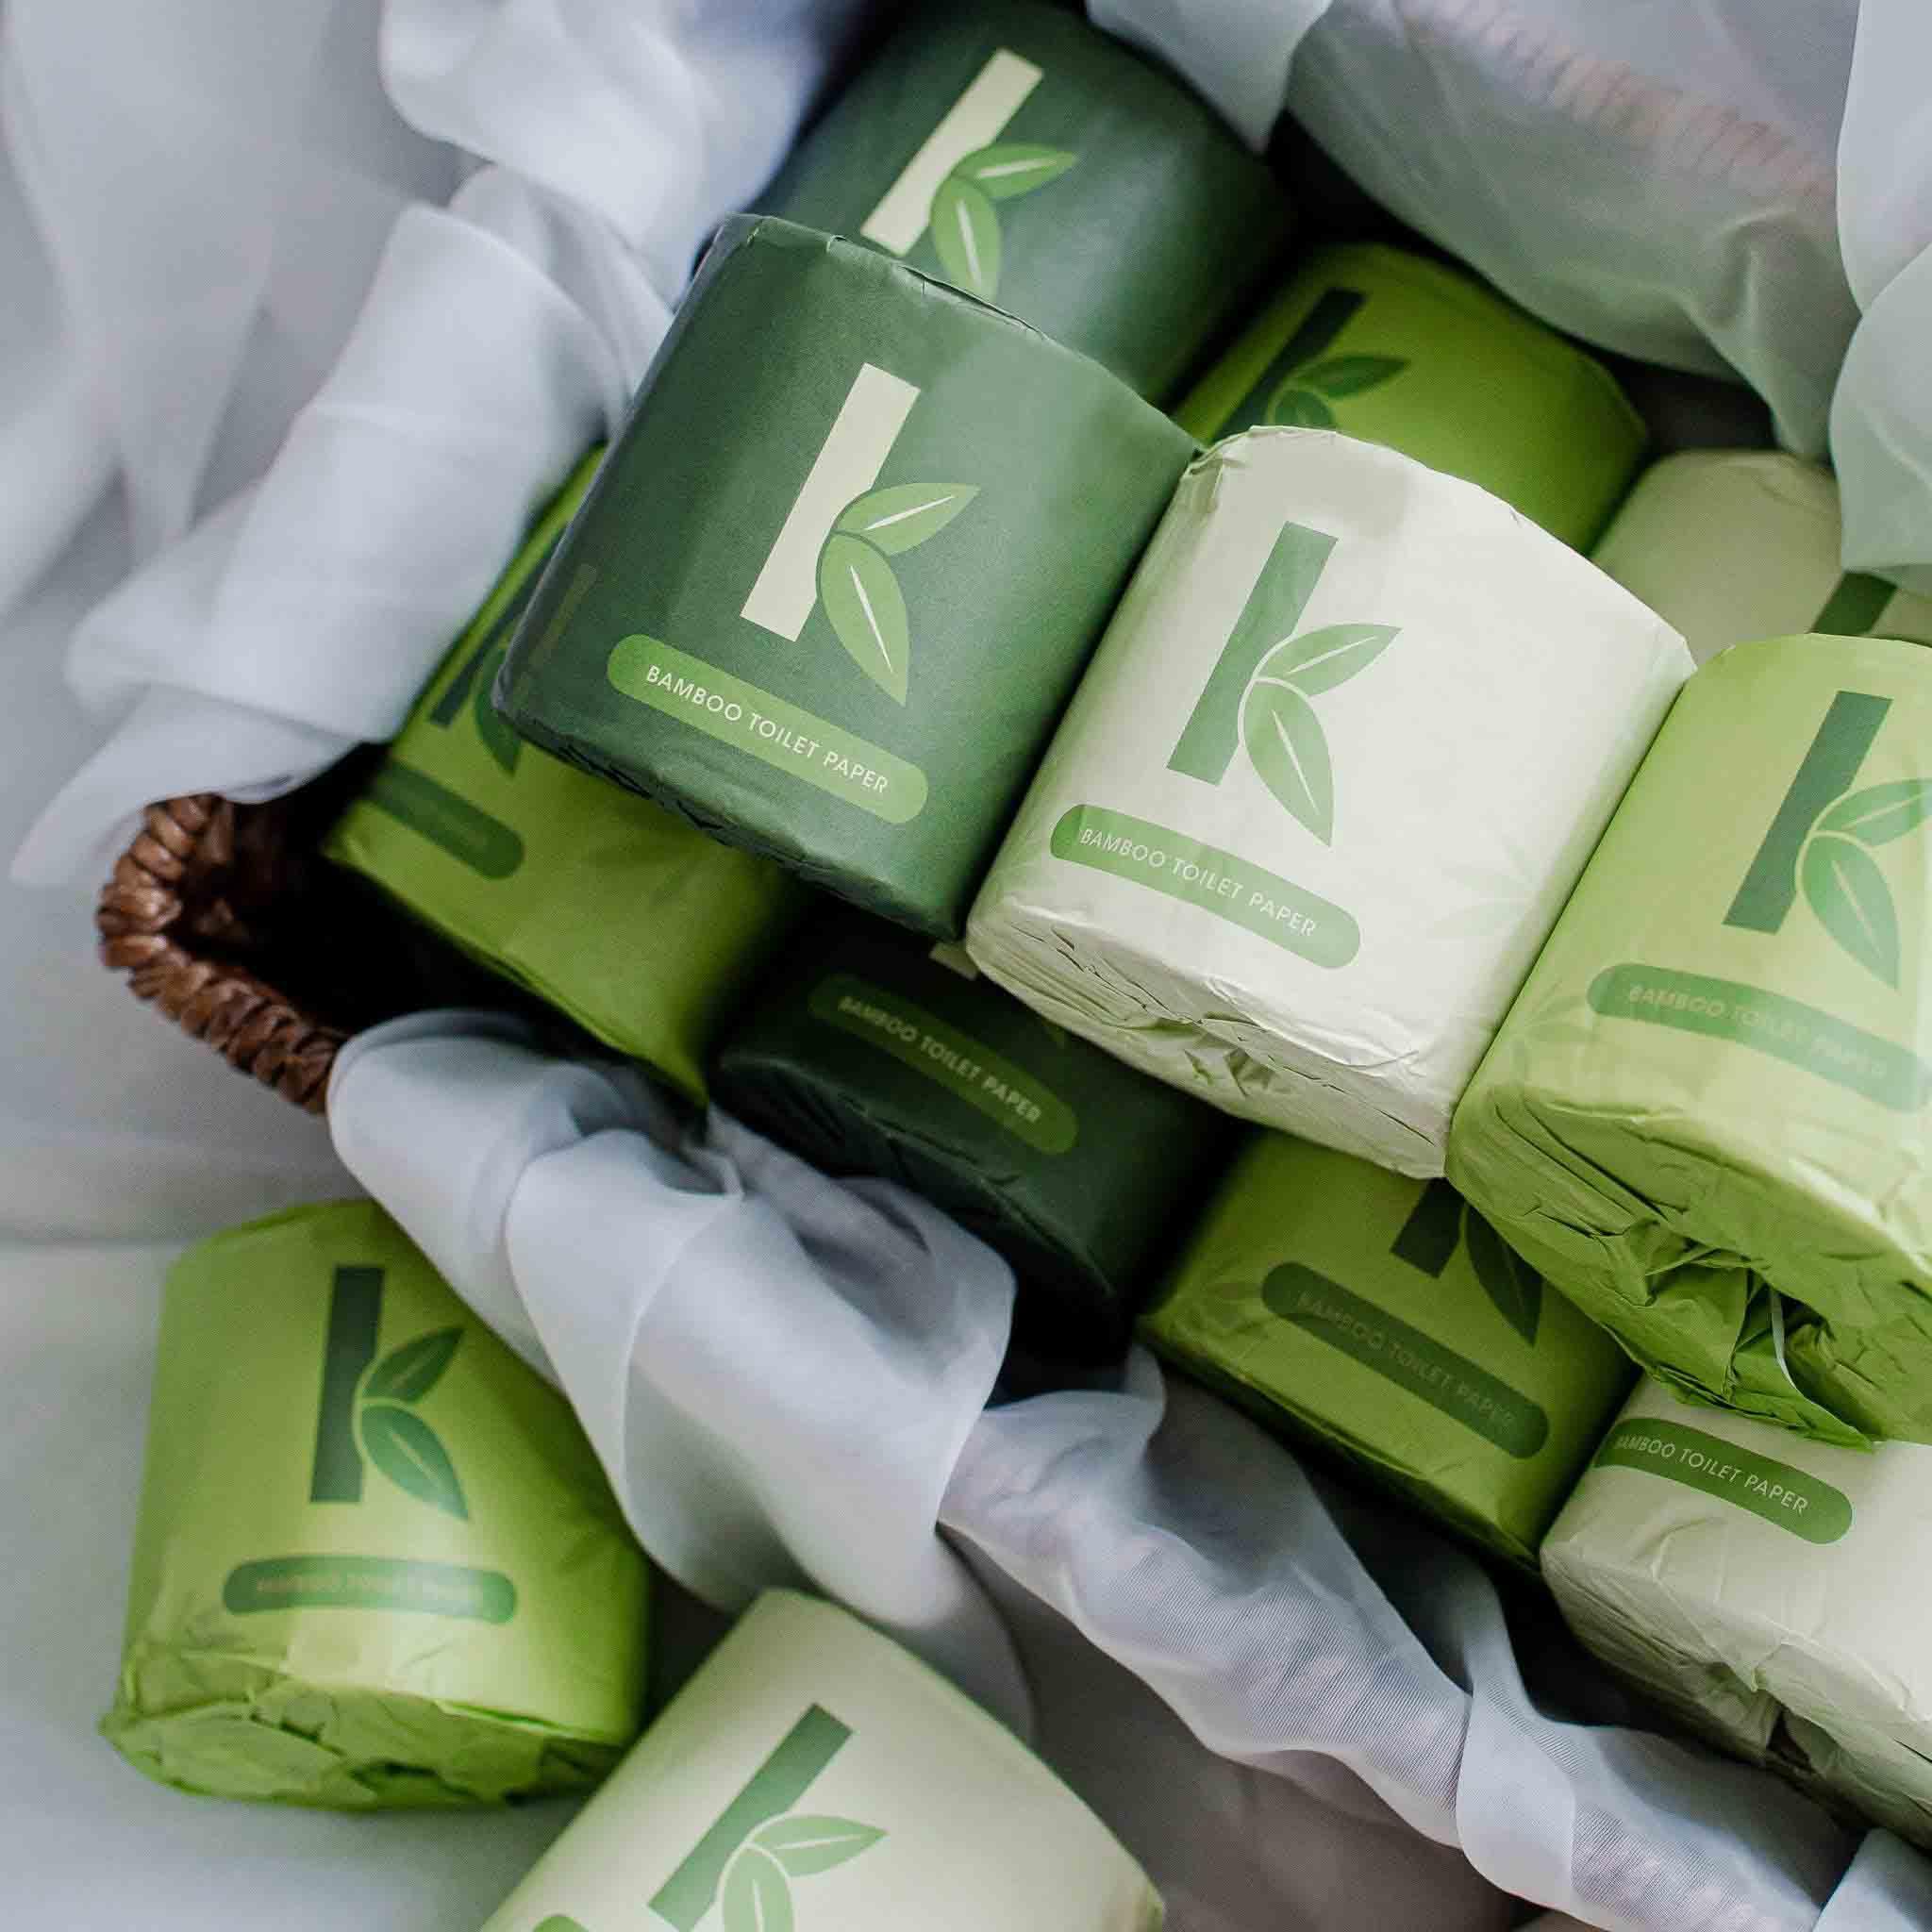 Bamboo Paper Towels - 100% Eco-Friendly Reusable Paper Towels | Seek Bamboo